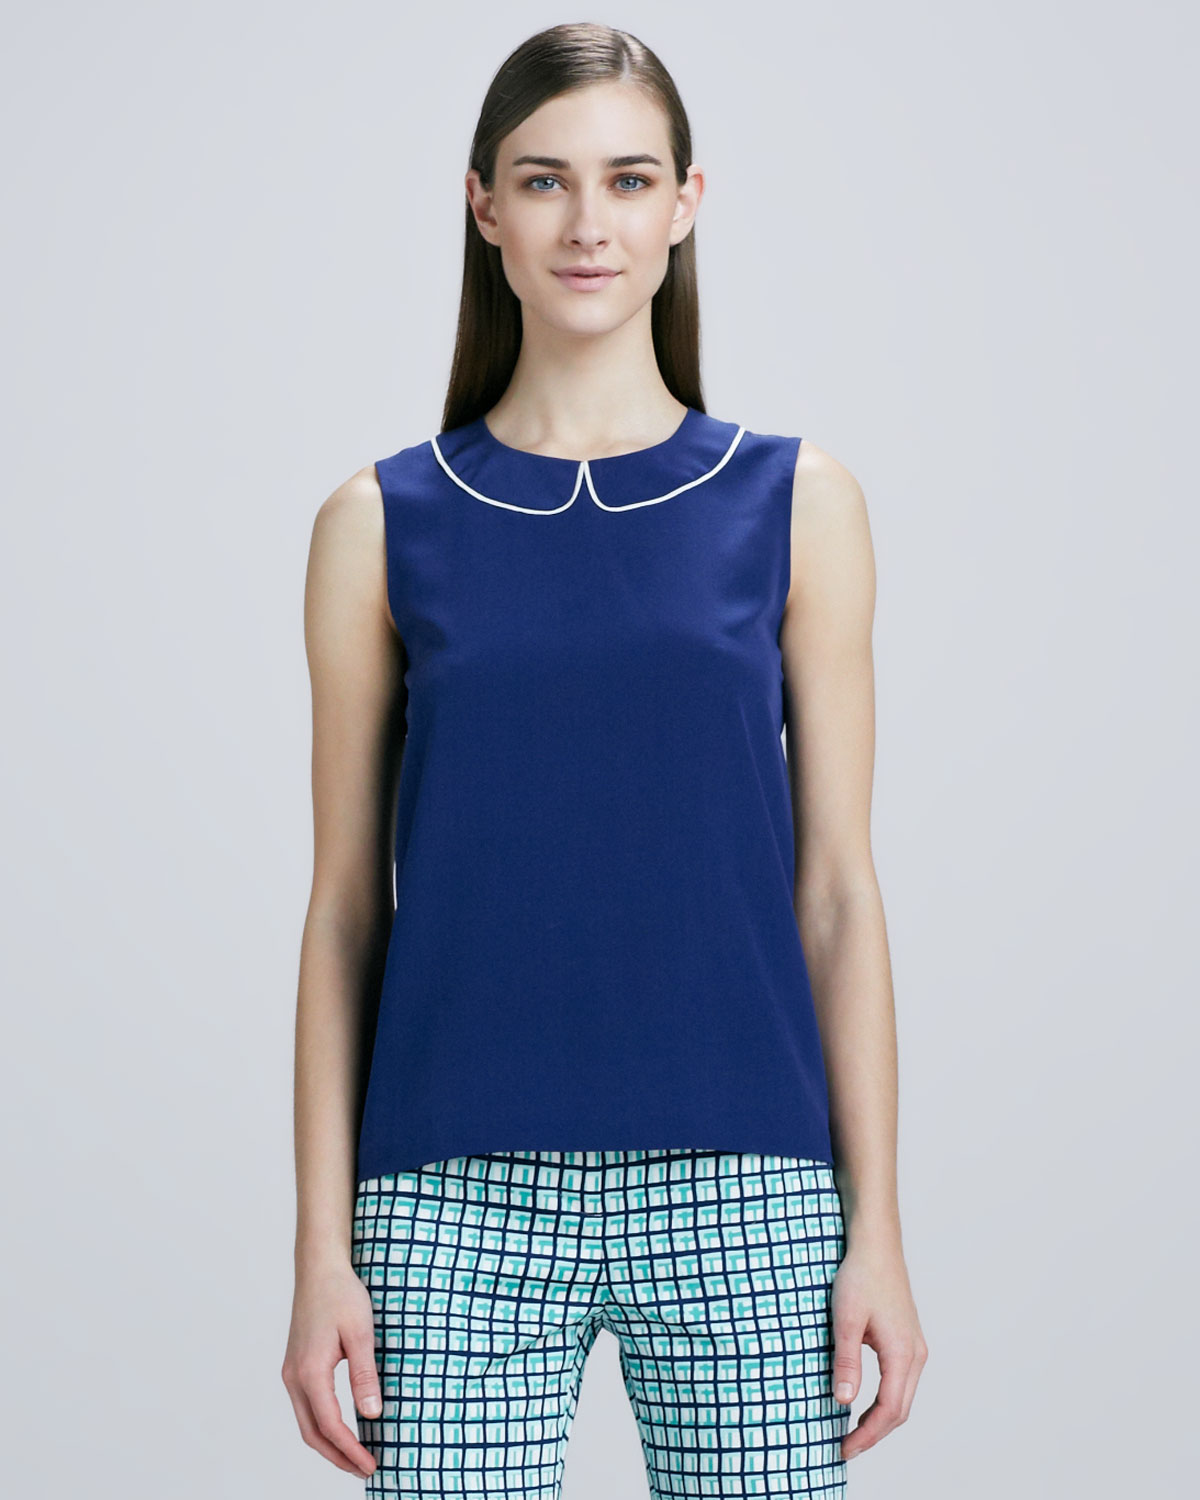 Lyst - Kate Spade New York Beatrix Sleeveless Silk Top in Blue